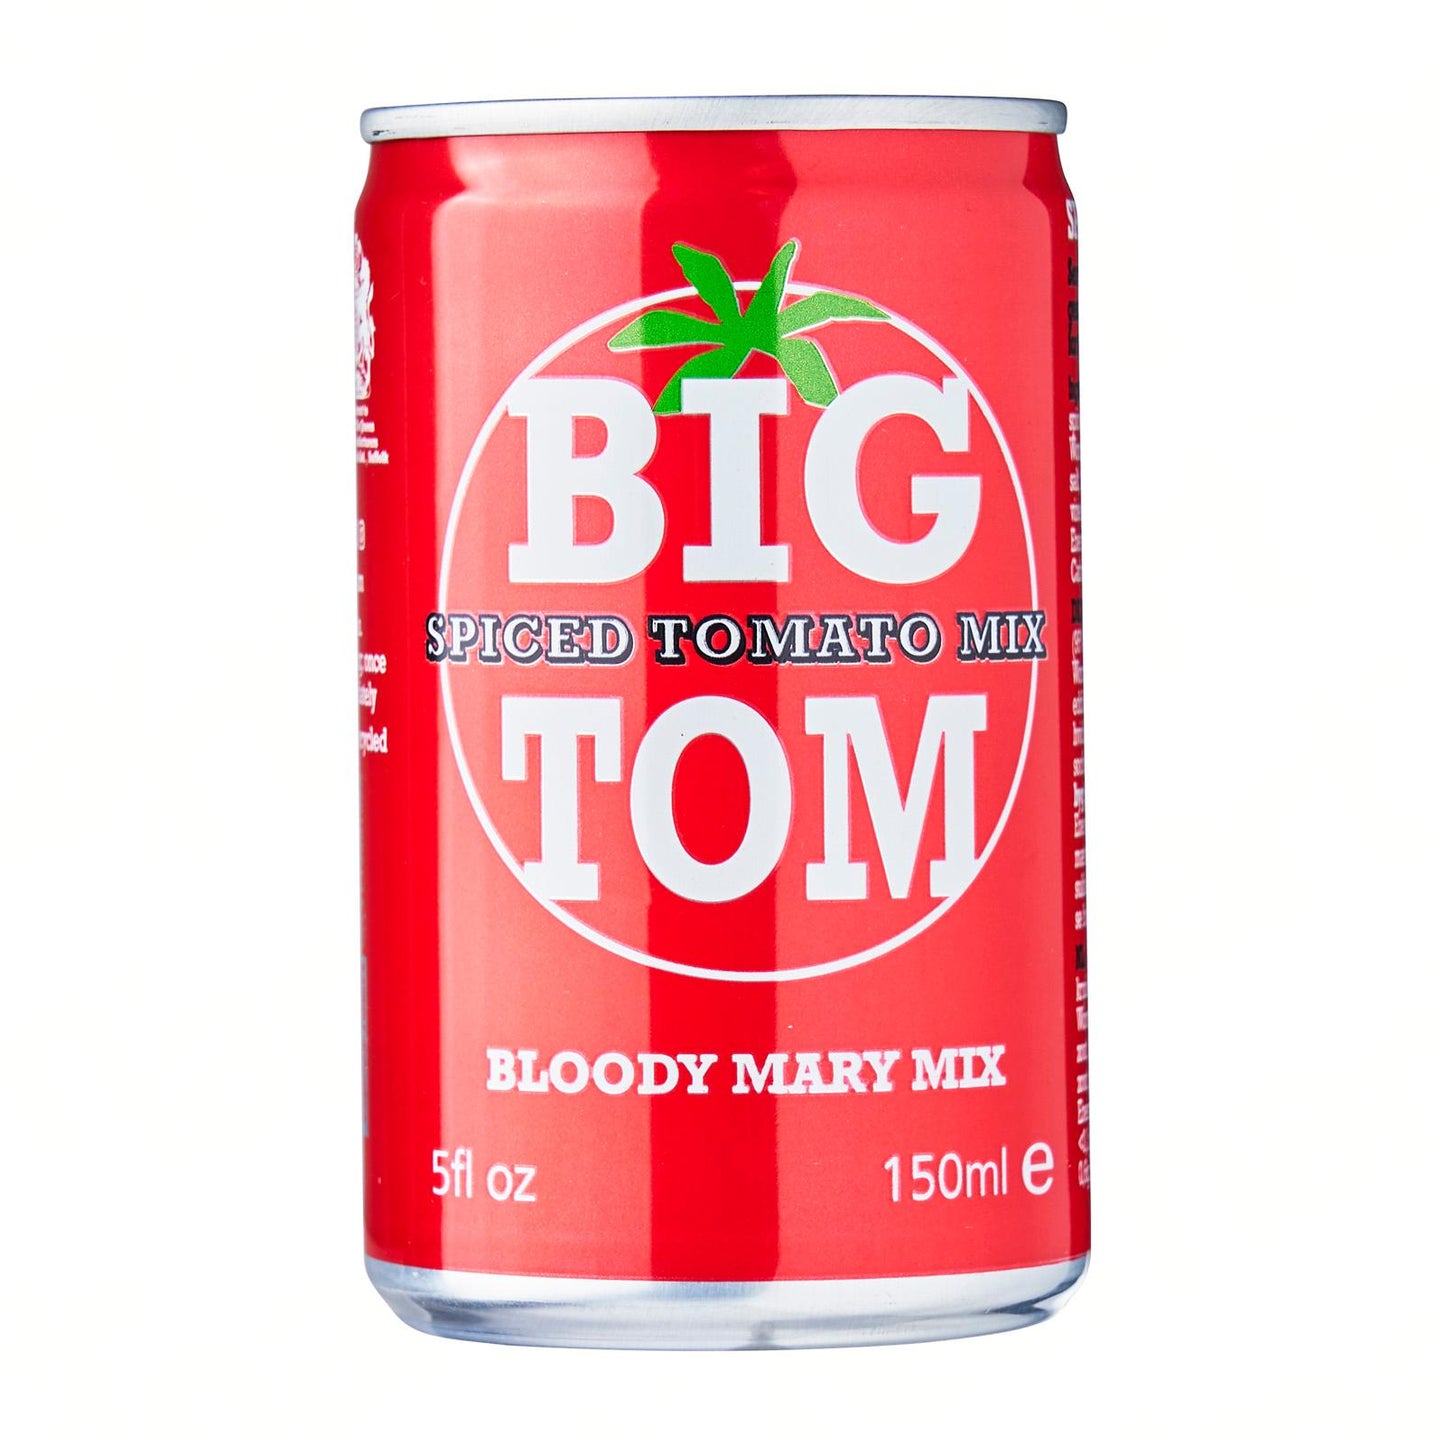 Big Tom Spiced Tomato Mix Bloody Mary Mix 150ml